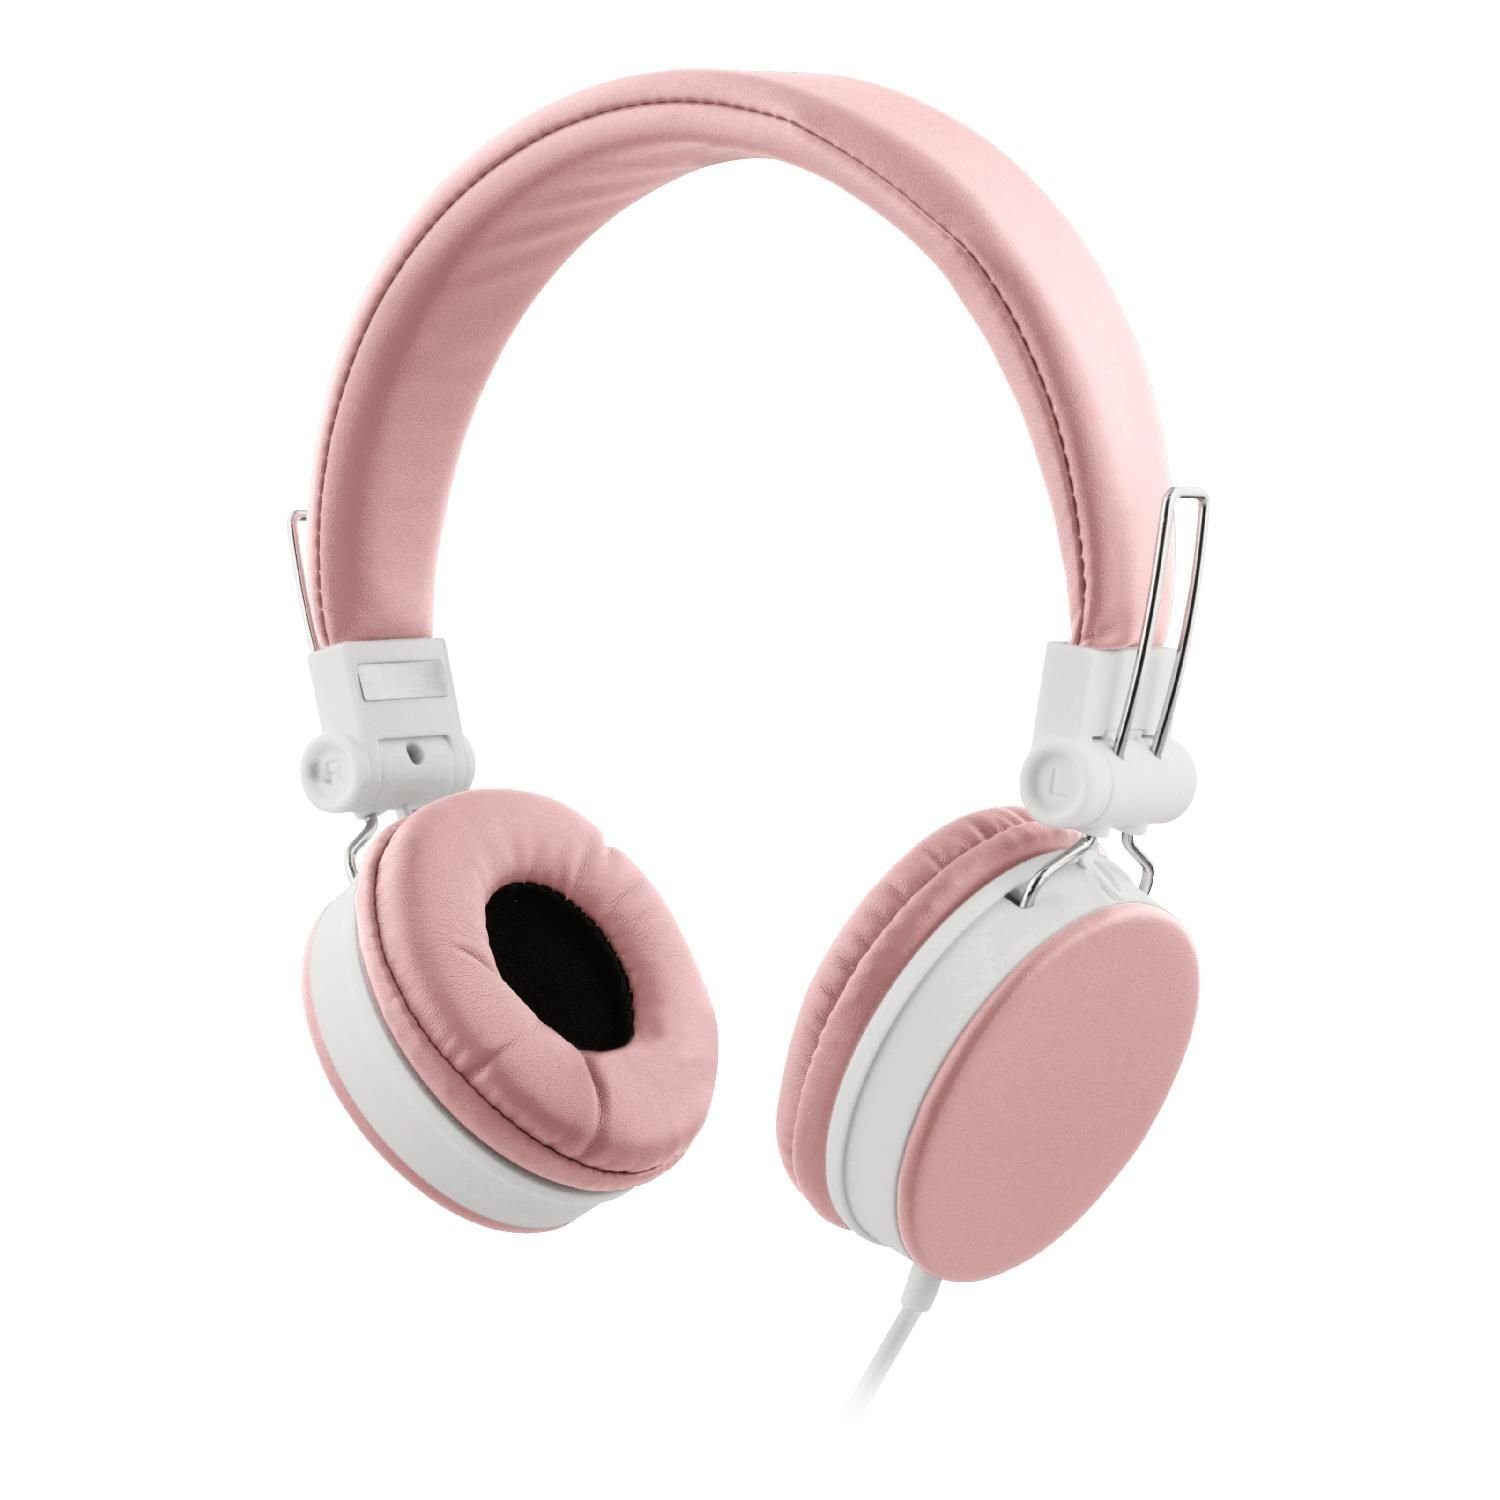 STREETZ Kopfhörer 1,2m Kabel 3.5mm Klinkenanschluss Ohrpolster On-Ear-Kopfhörer (integriertes Mikrofon, faltbares Headset, pink / rosa, inkl. 5 Jahre Herstellergarantie) | On-Ear-Kopfhörer